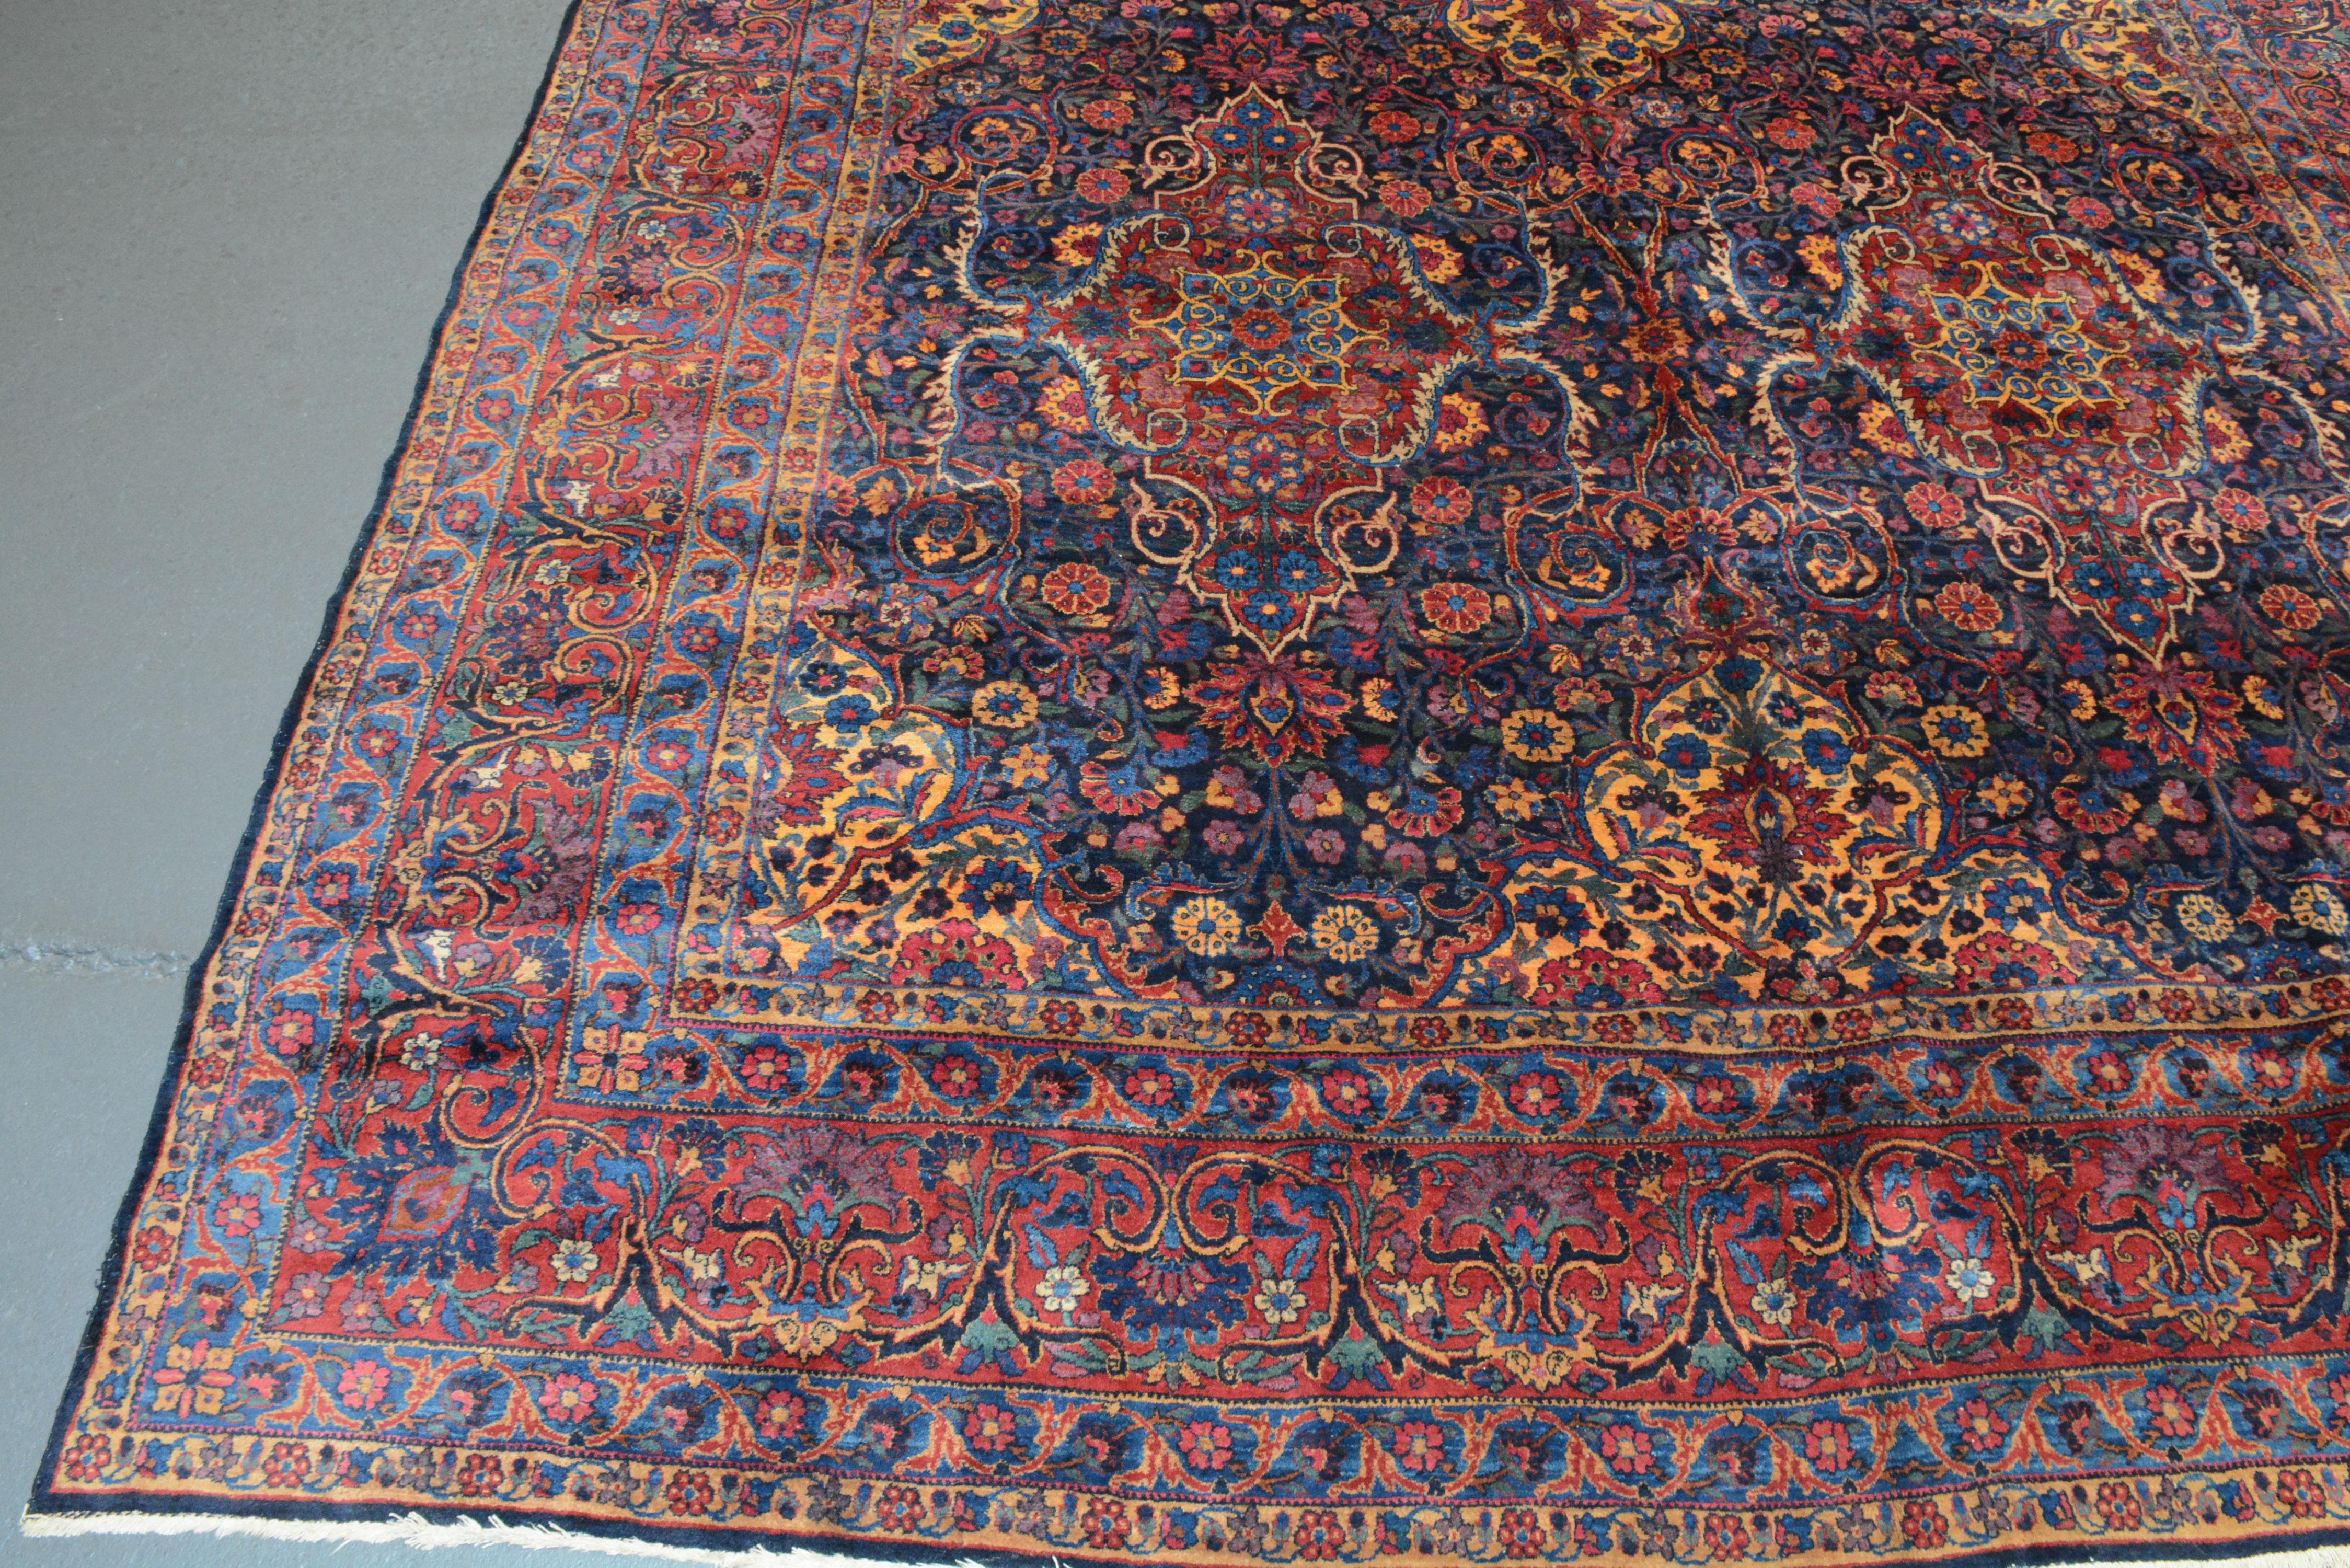 Mid-20th Century Antique Signed Persian Kerman Carpet For Sale